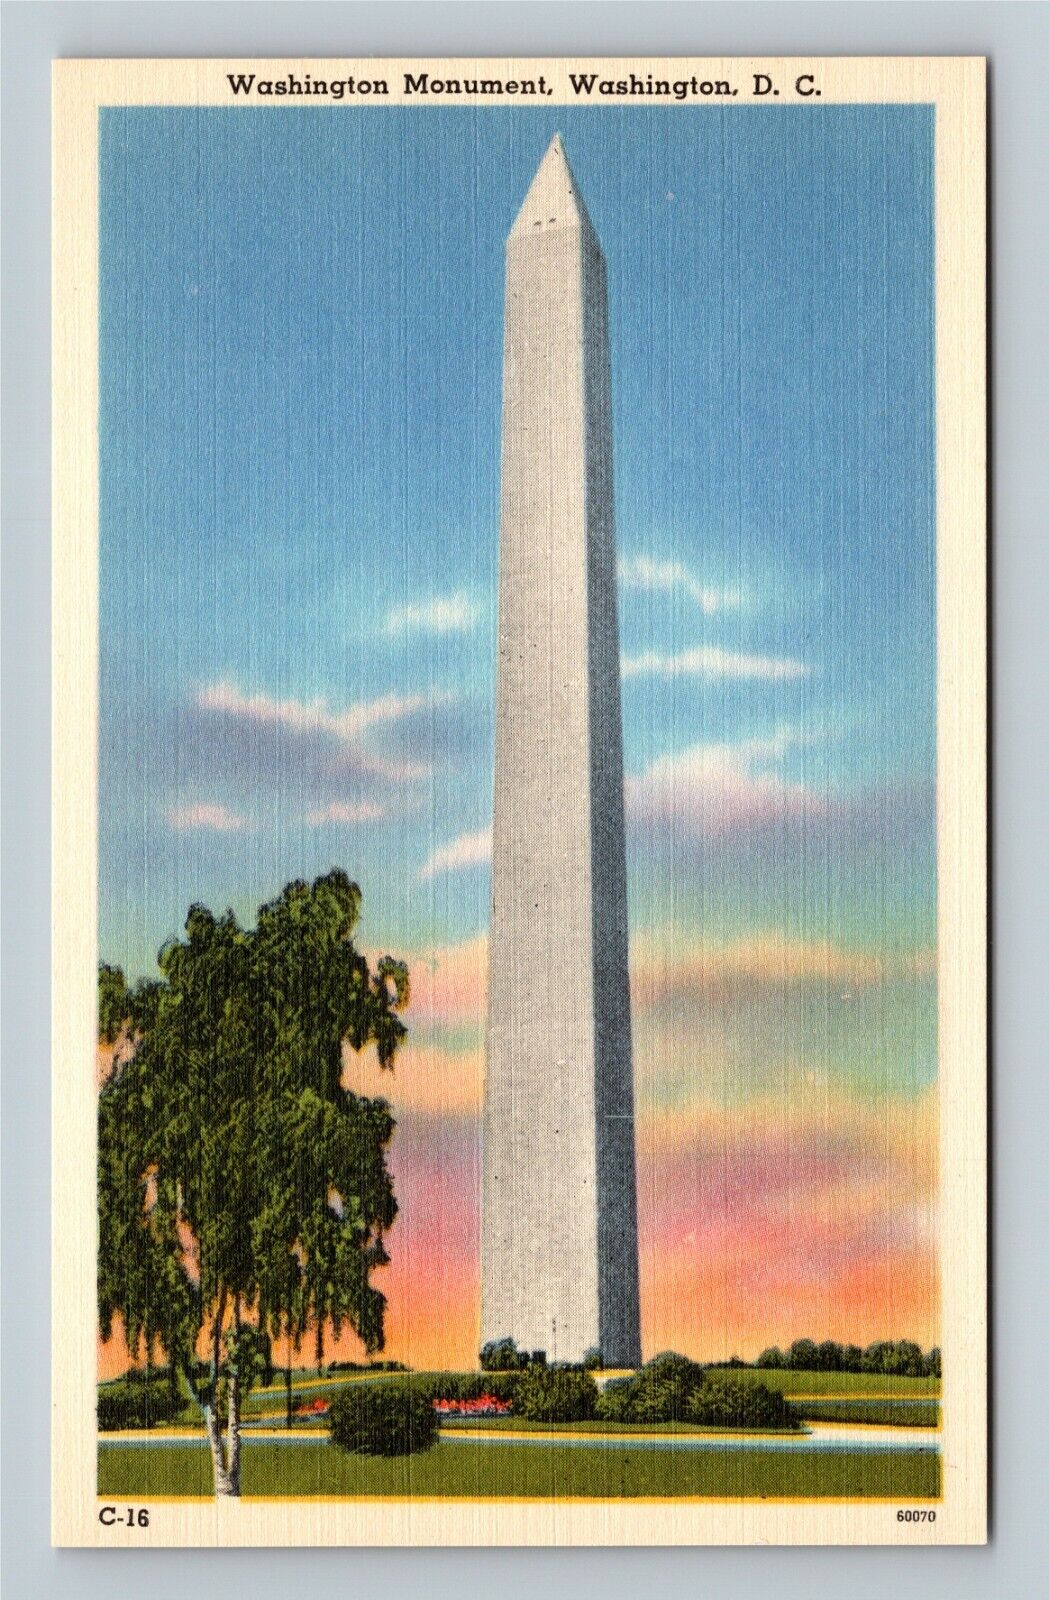 Washington D.C., Washington Monument, Obelisk, Scenic Grounds Vintage Postcard